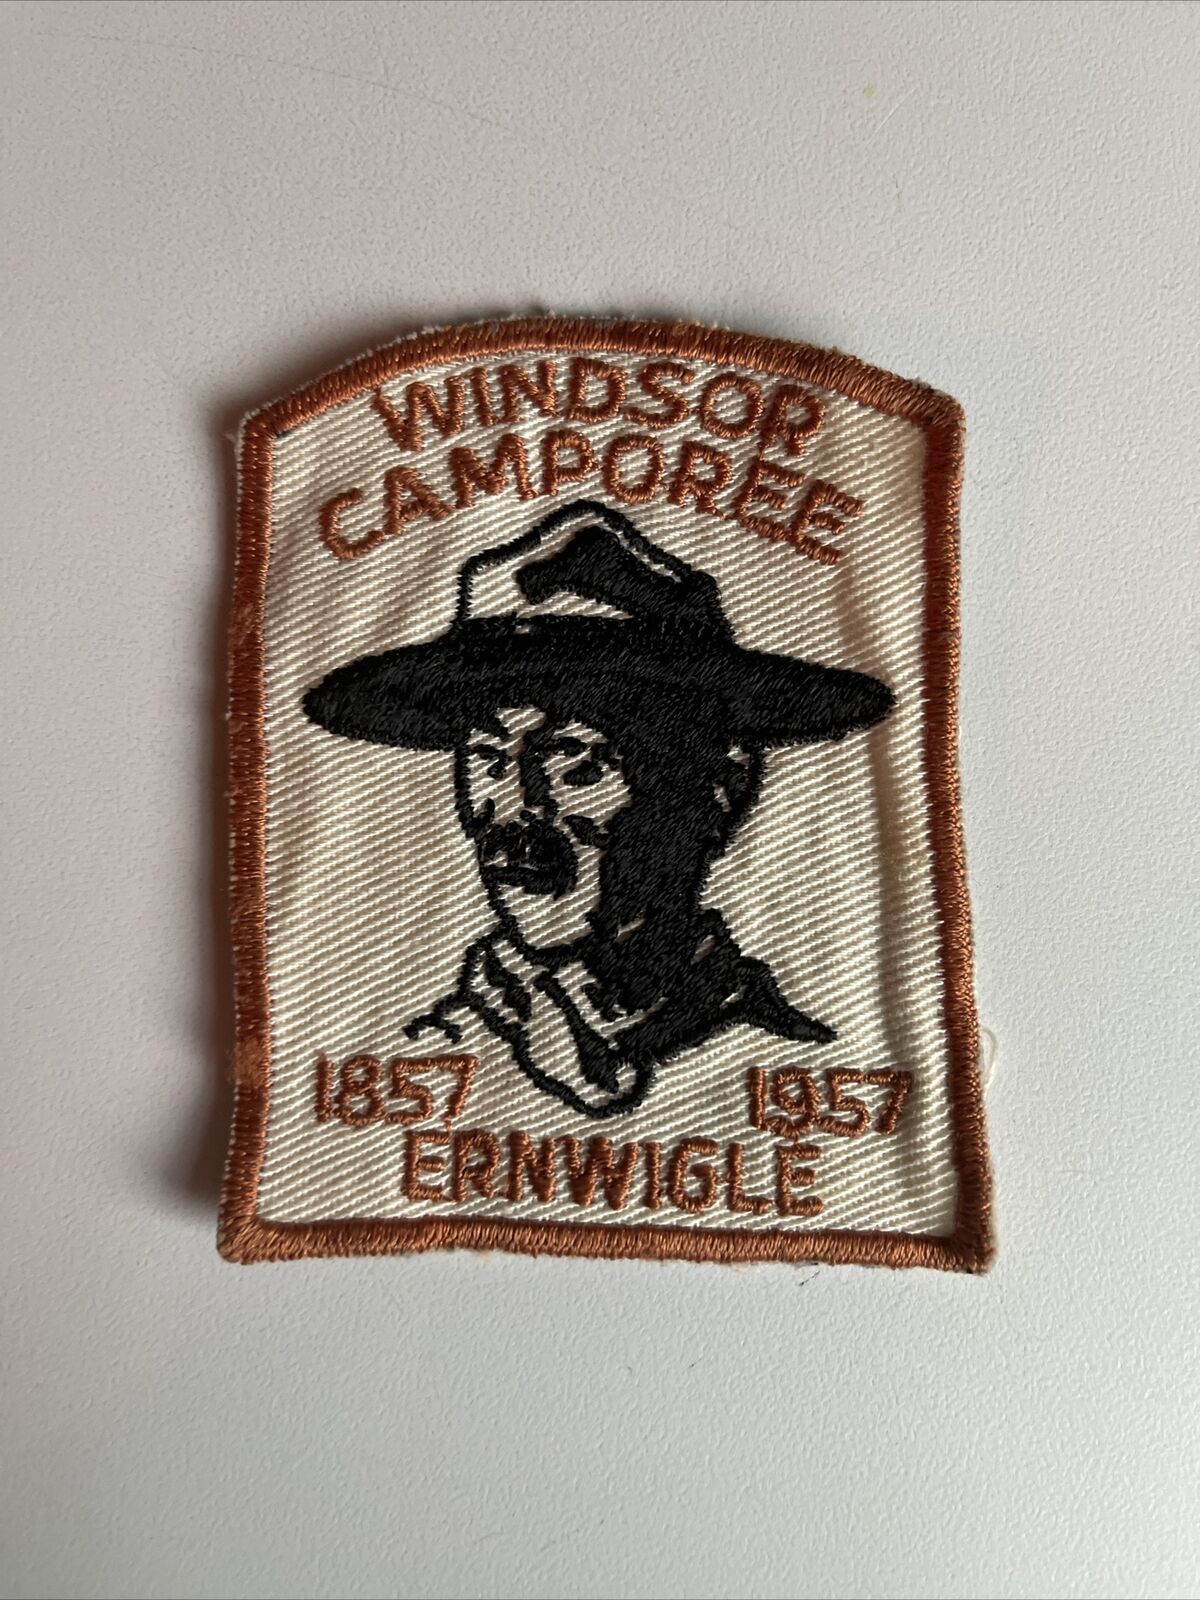 Vintage Boy Scout Patch Windsor Camporee 1857-1957 ERNWIGLE BSA